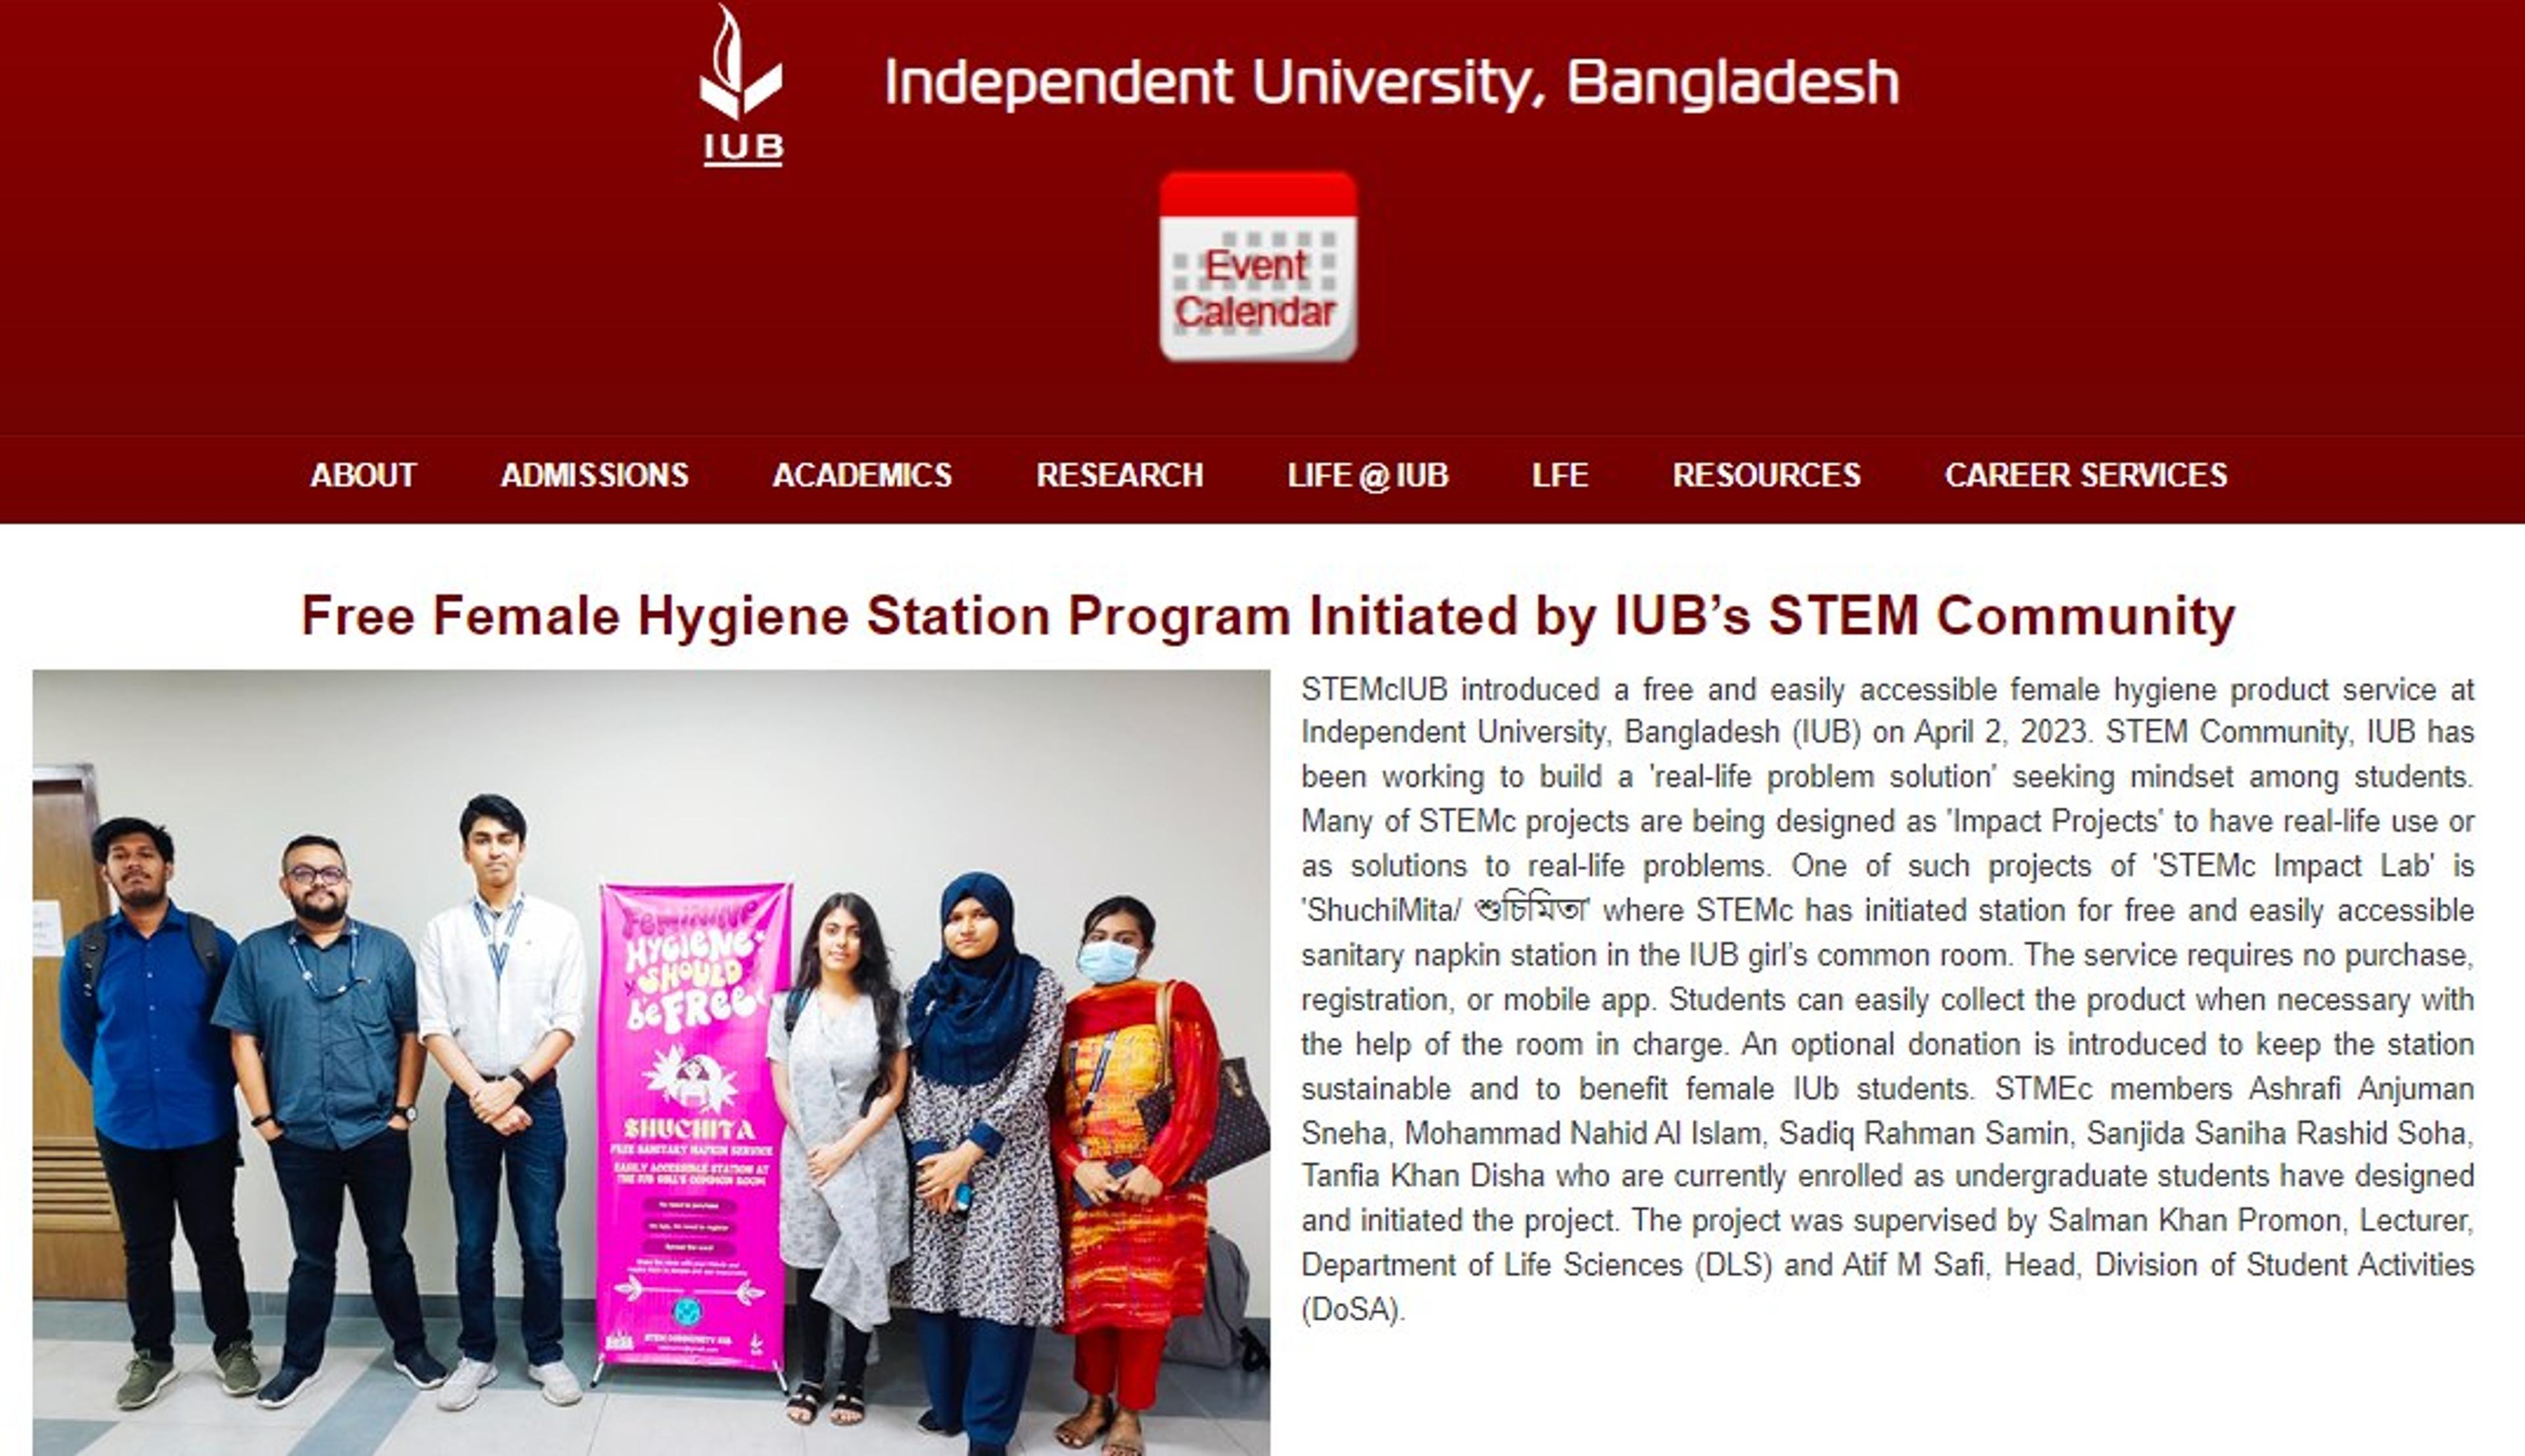 Free Female Hygiene Station Program Initiated by STEM Community, IUB